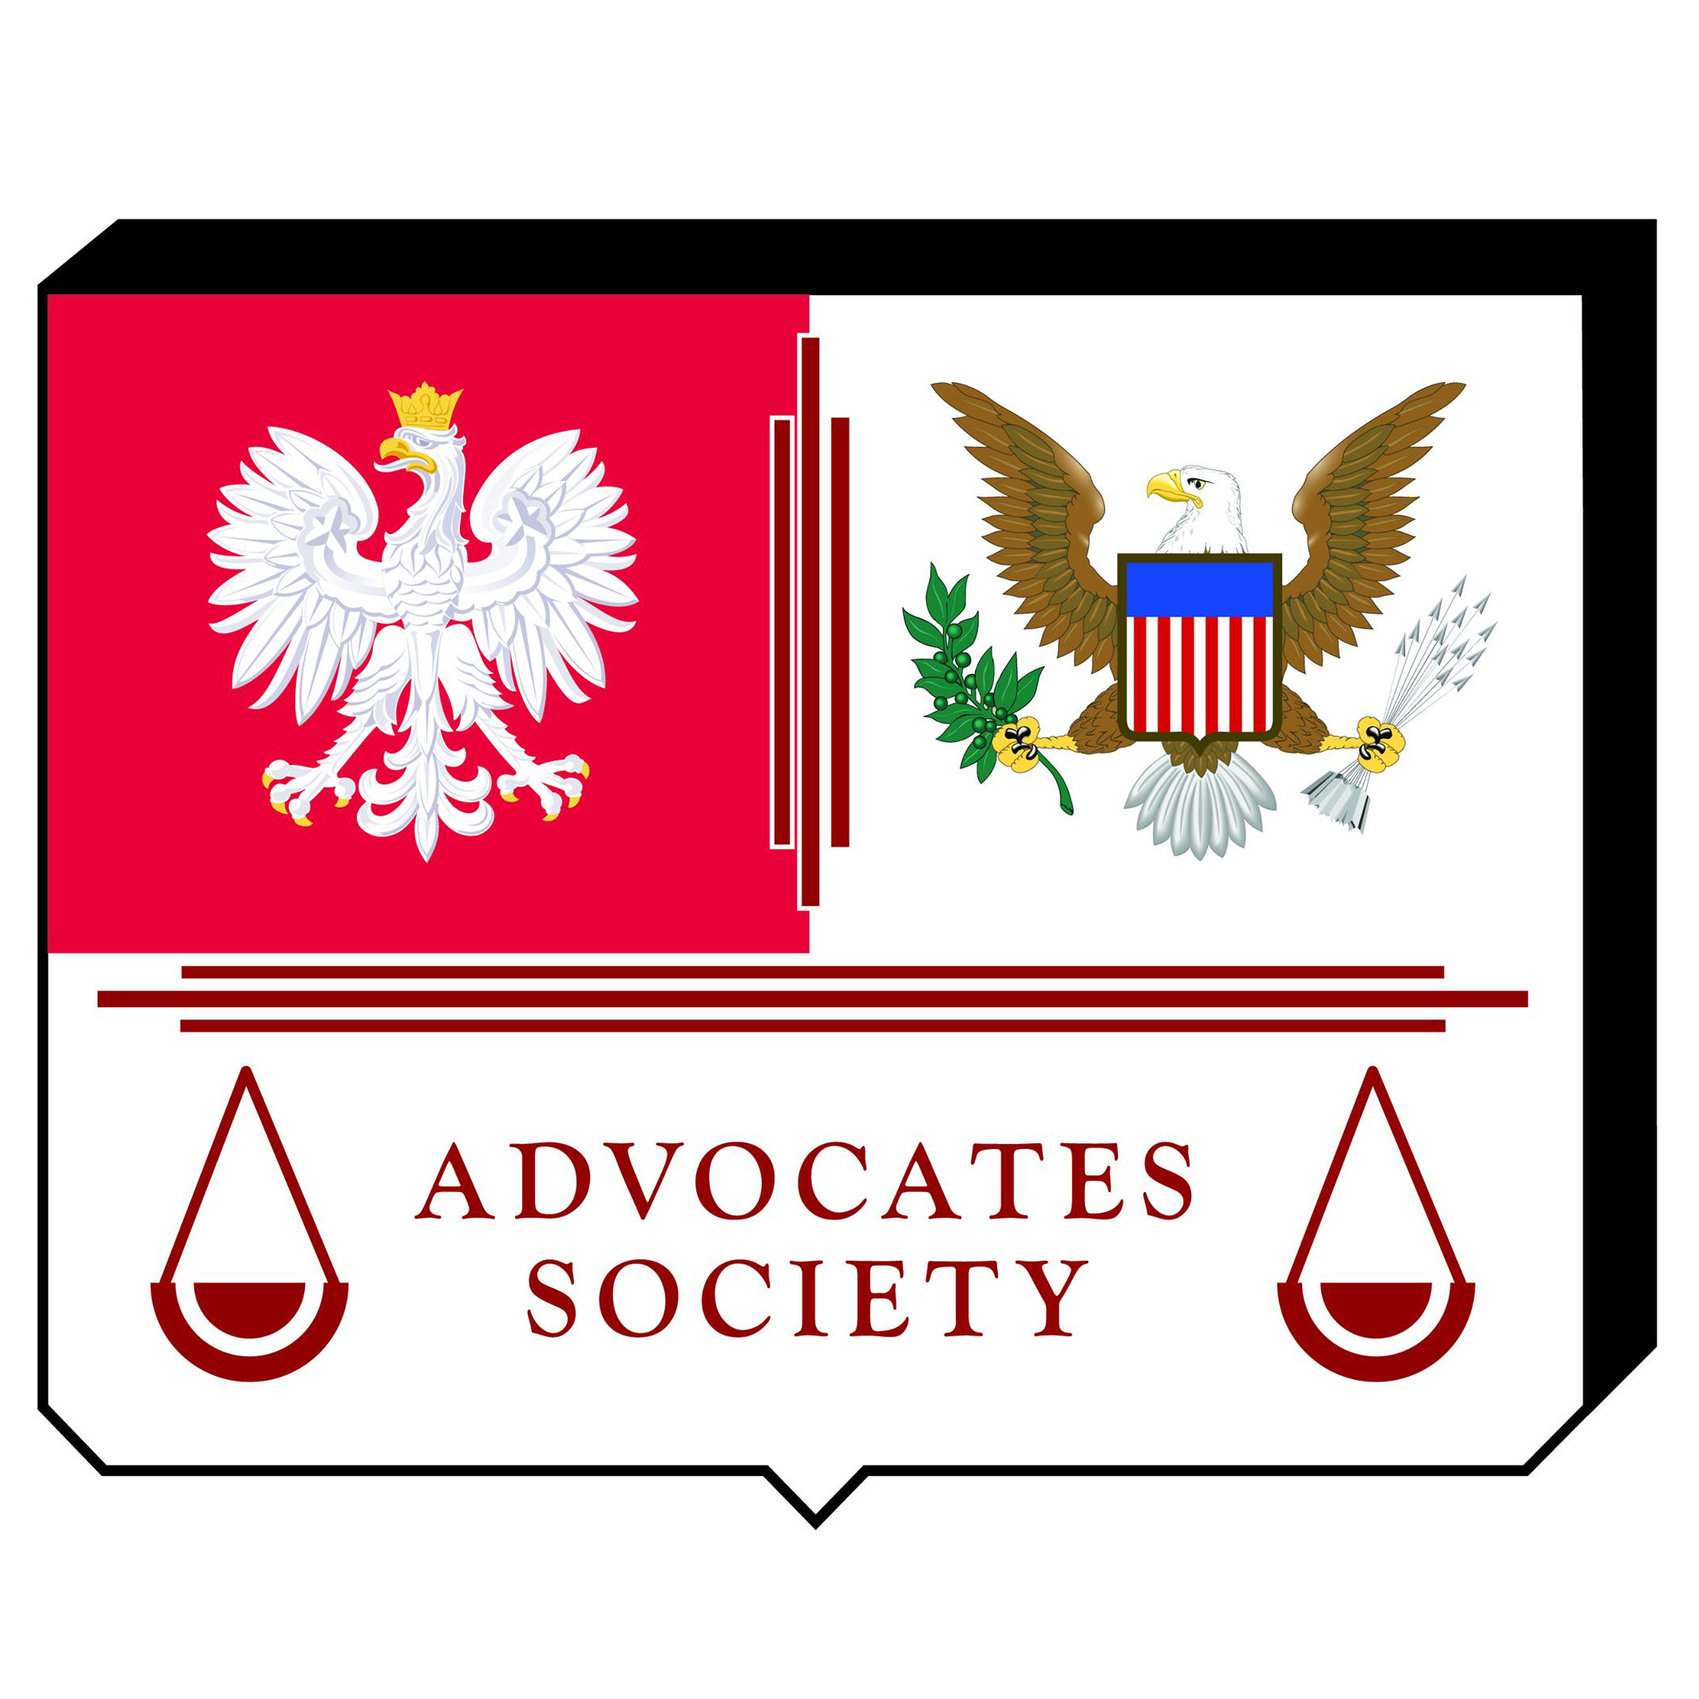 Polish Speaking Organizations in USA - Advocates Society